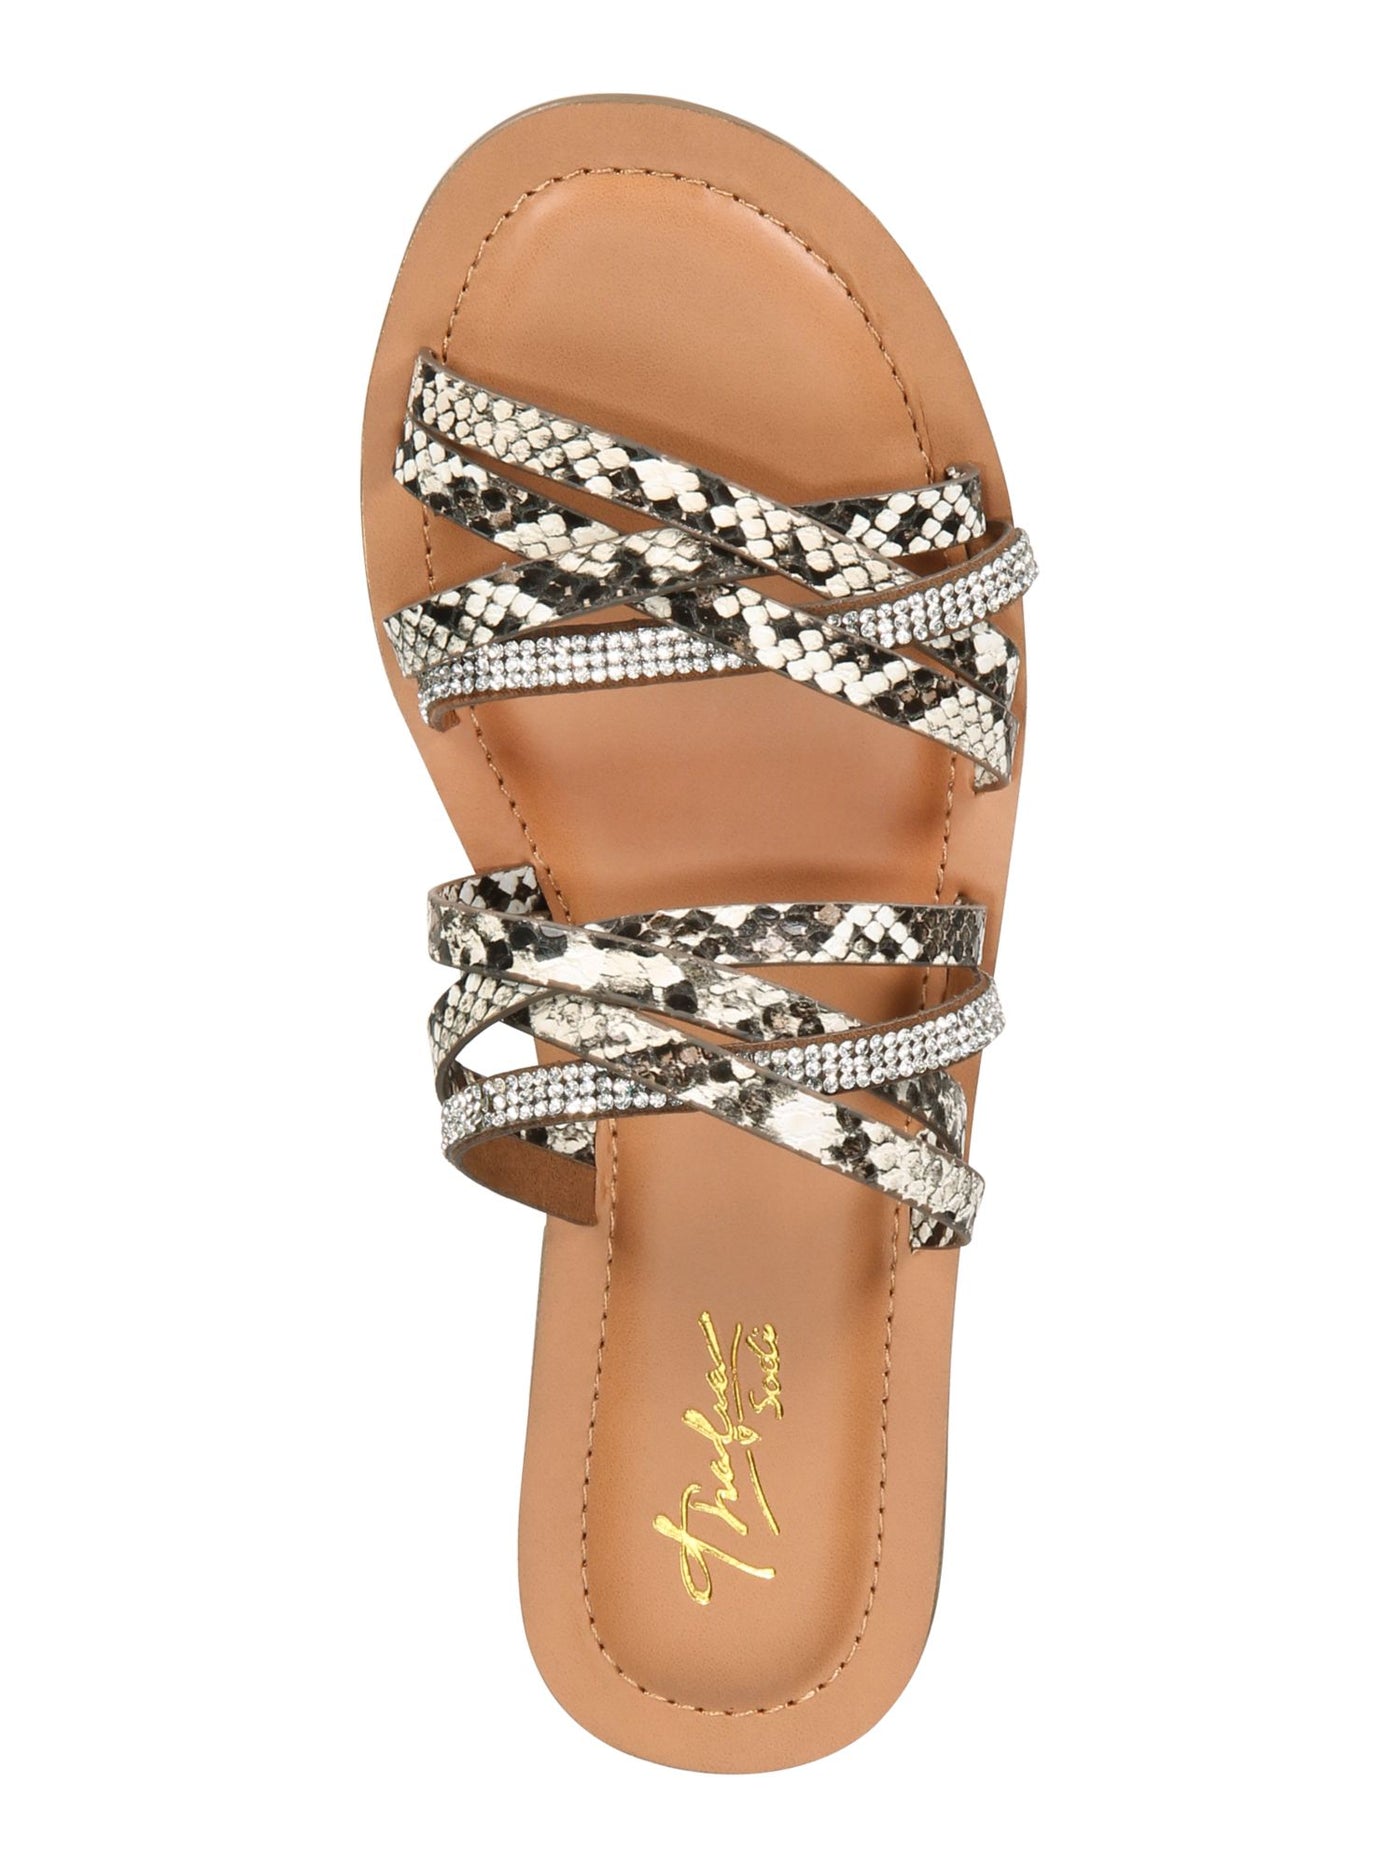 THALIA SODI Womens Beige Snake Print Strappy Rhinestone Marlina Round Toe Slip On Sandals 8.5 M